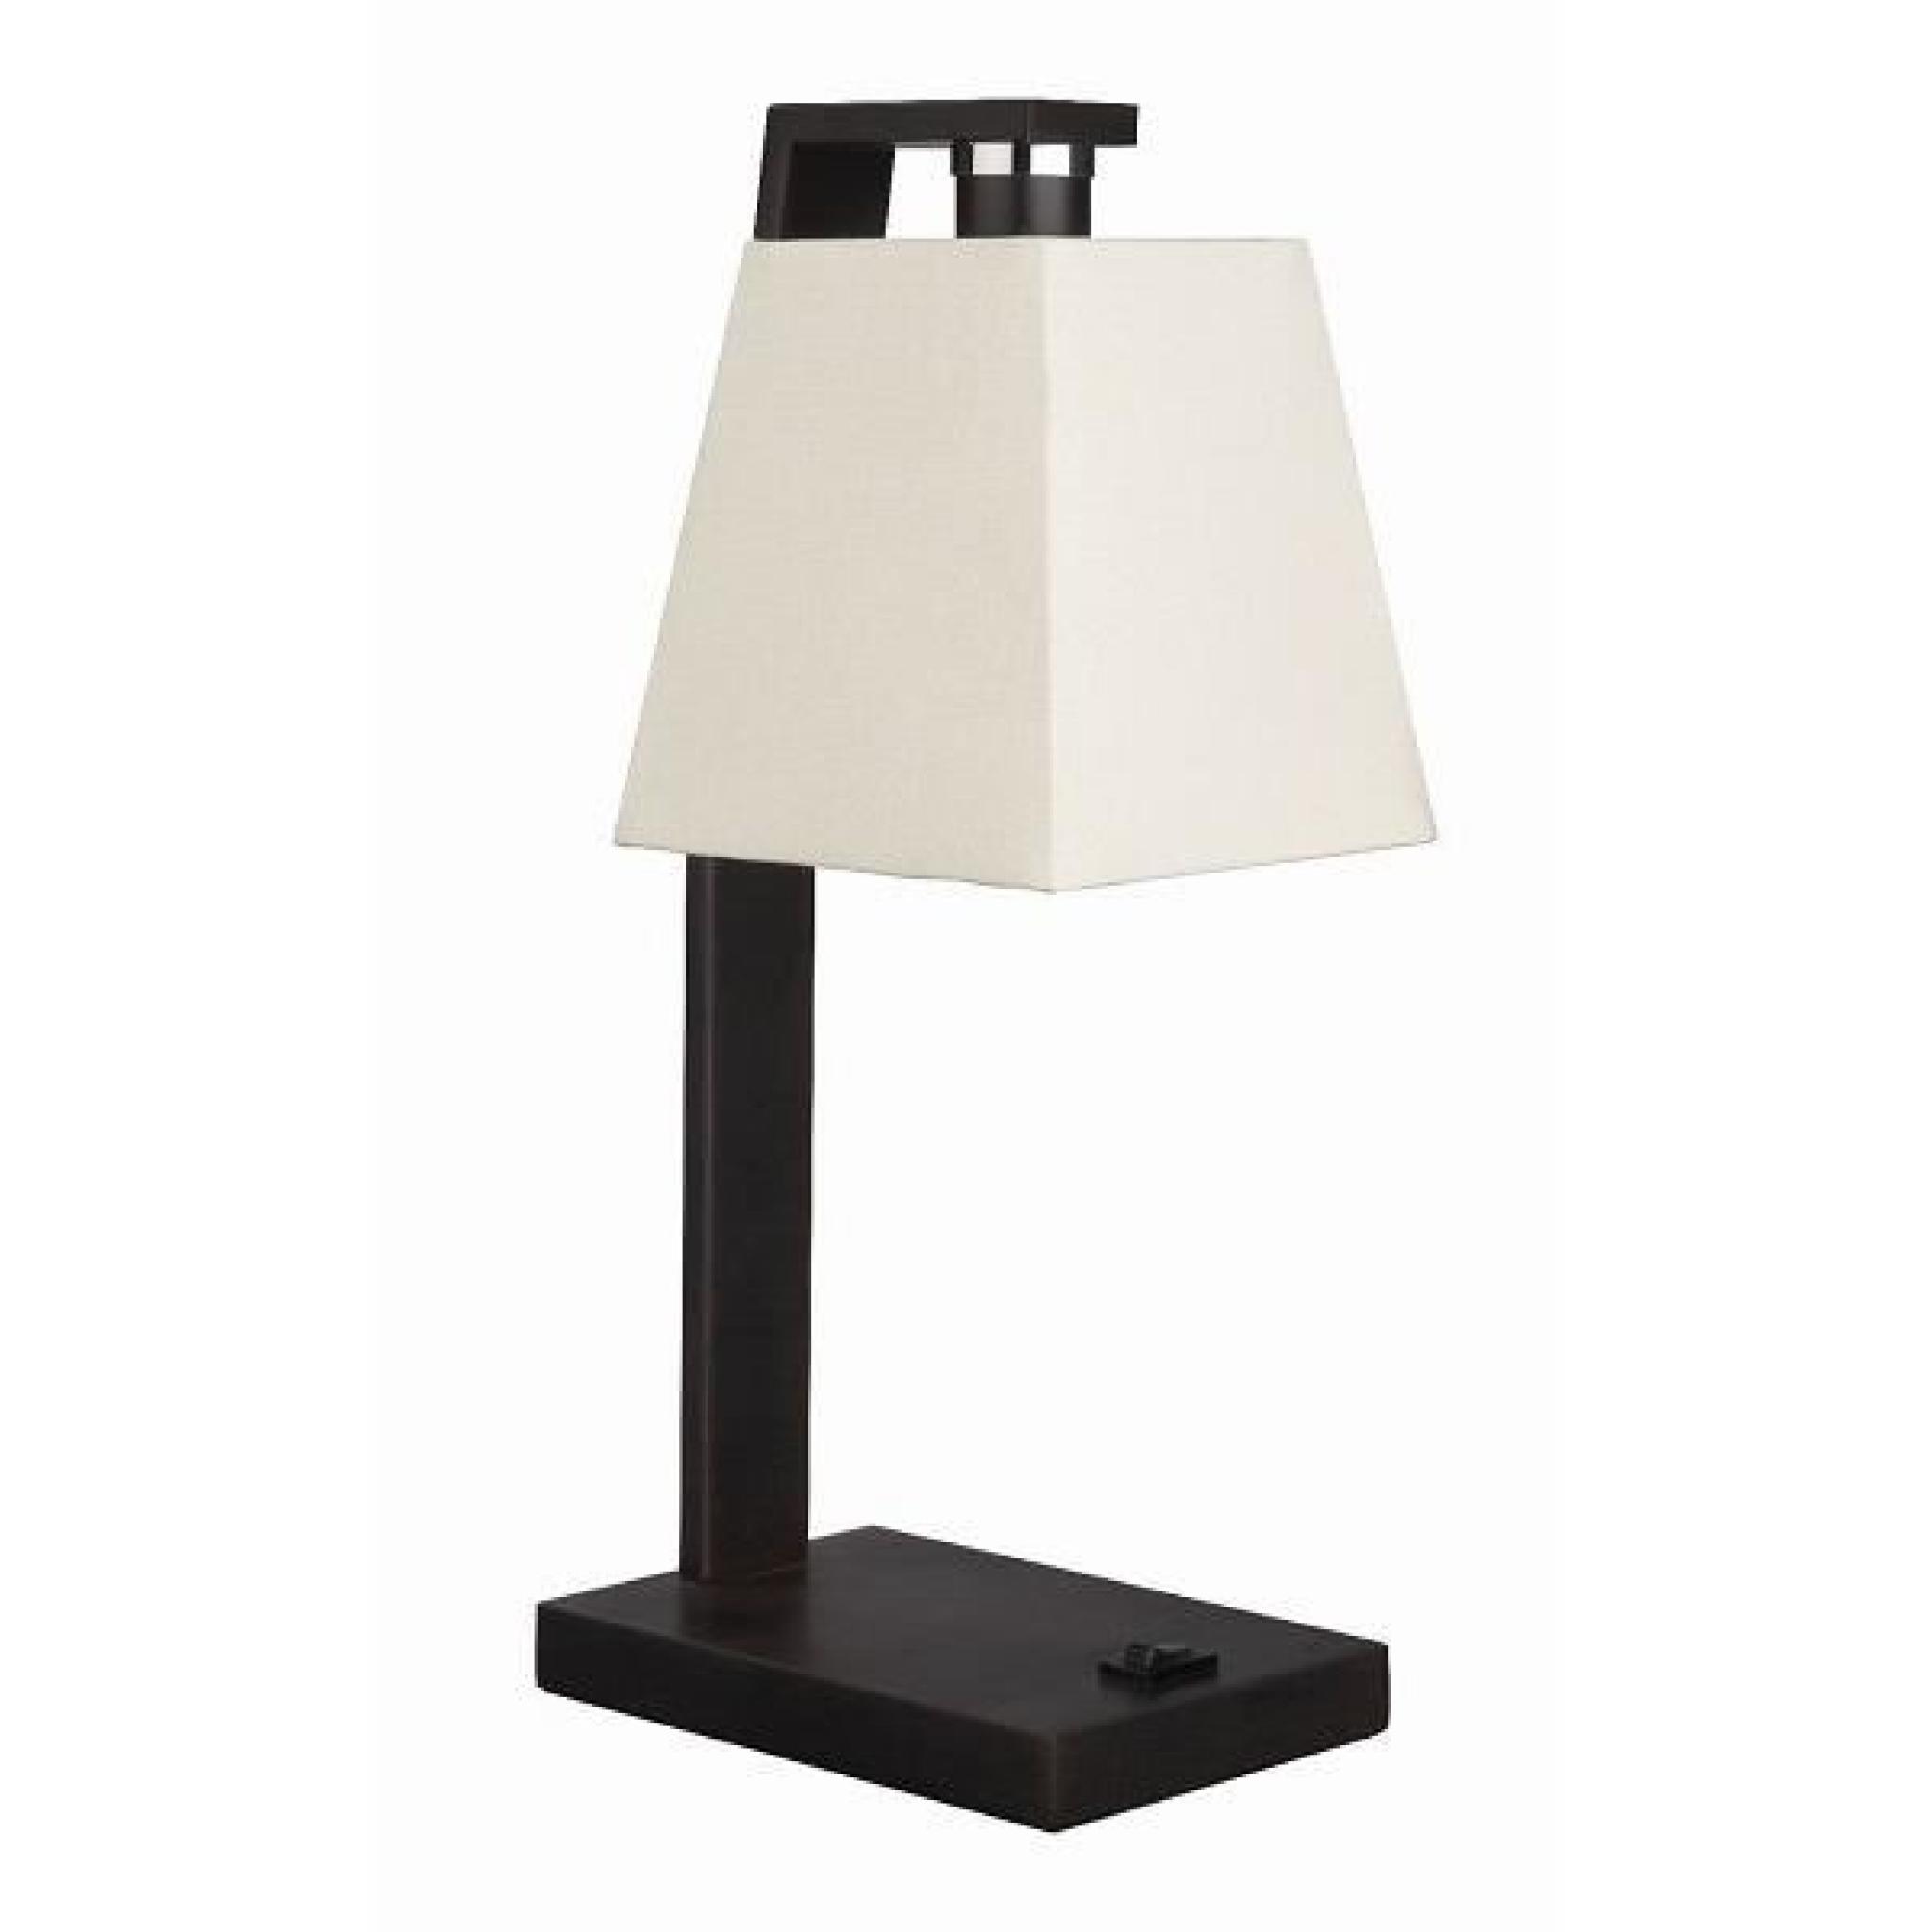  Philips  - Lampe de table - MA 376998610